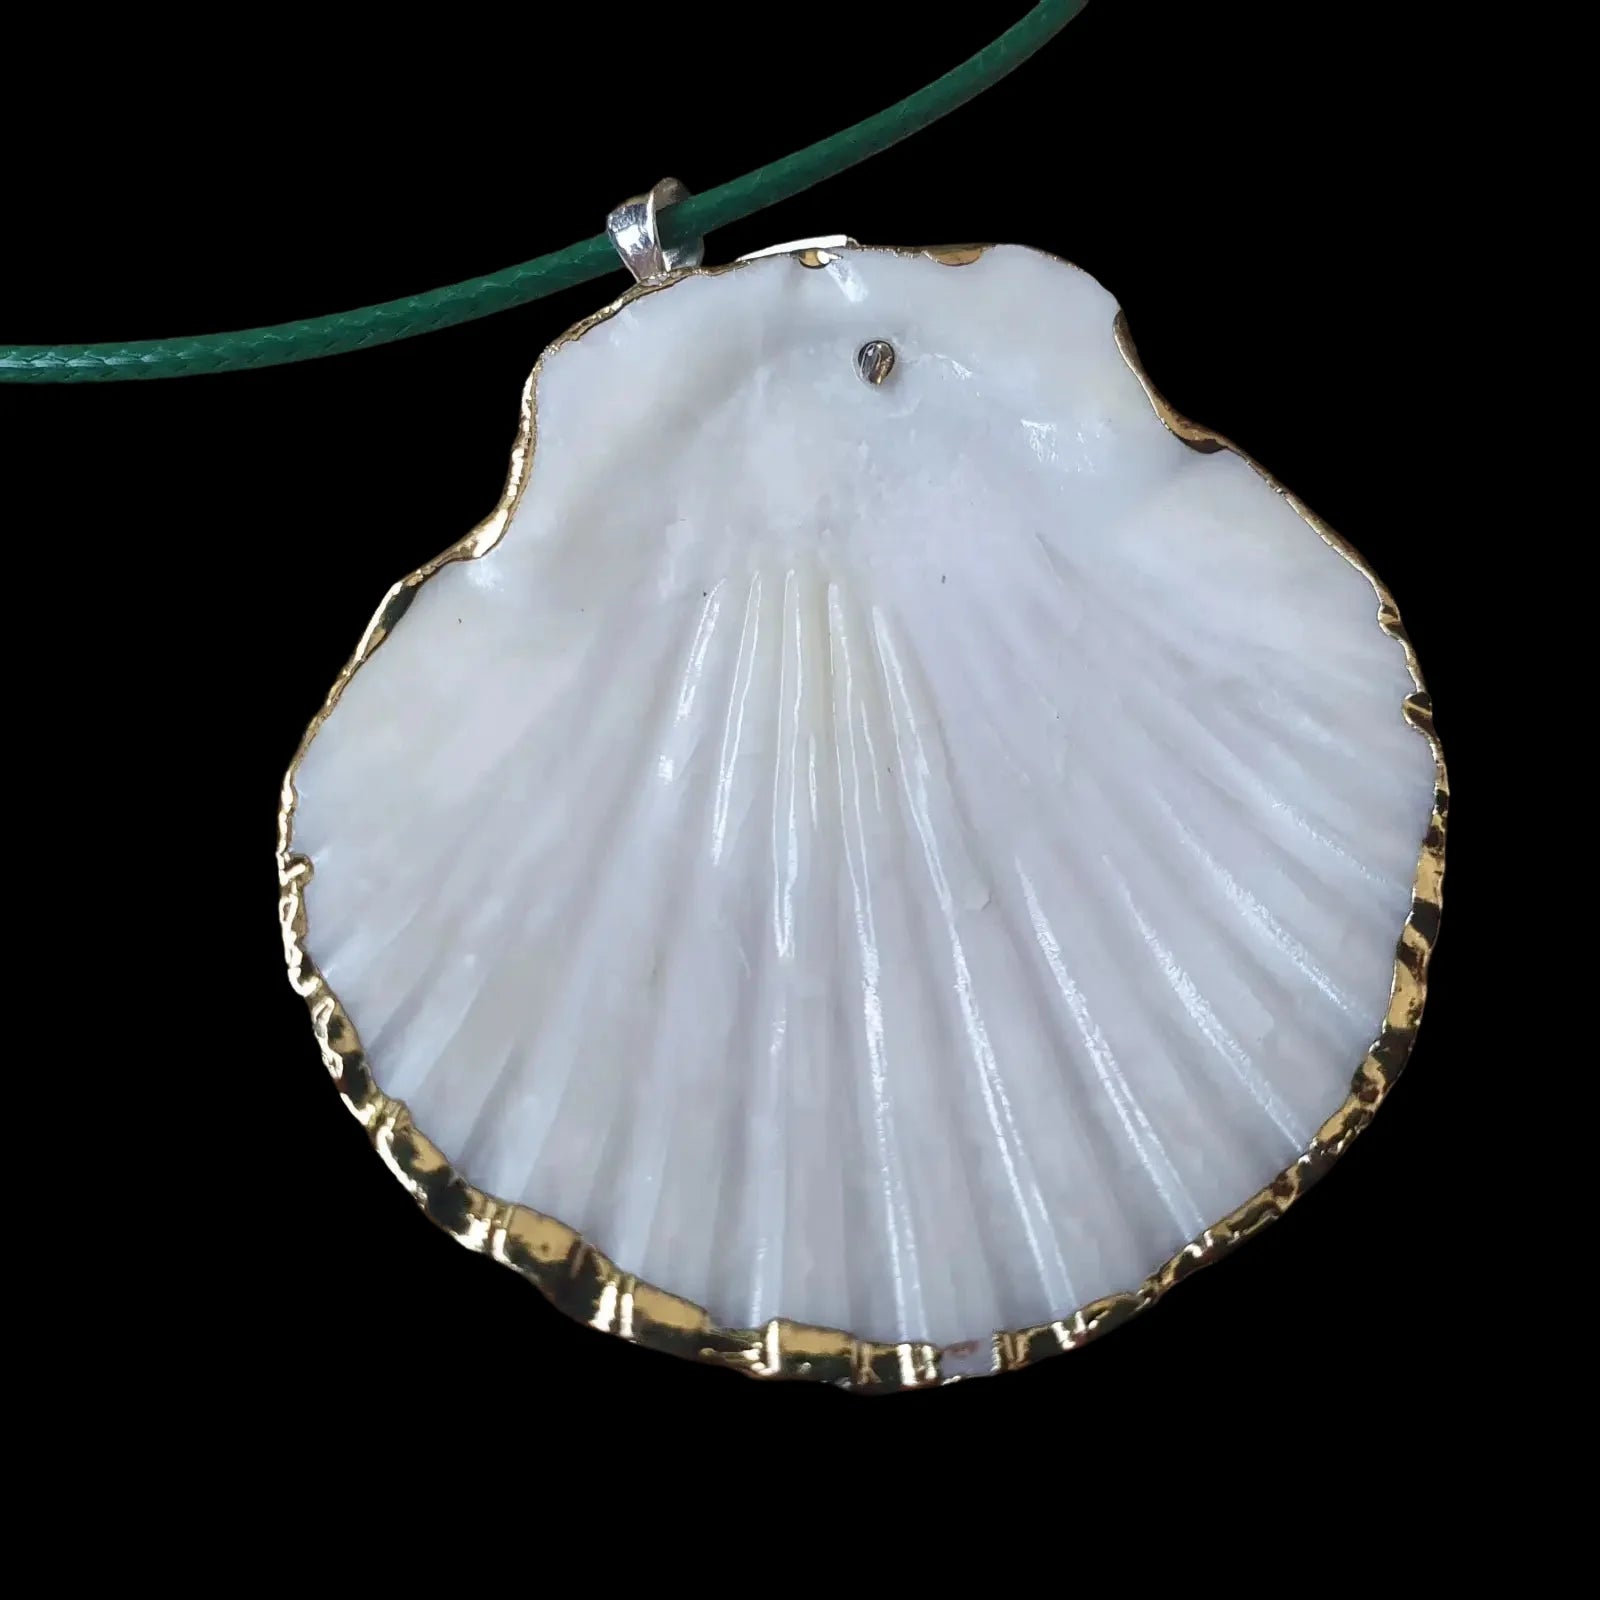 Real Seashell Necklace Pendant Charm Handmade Jewellery